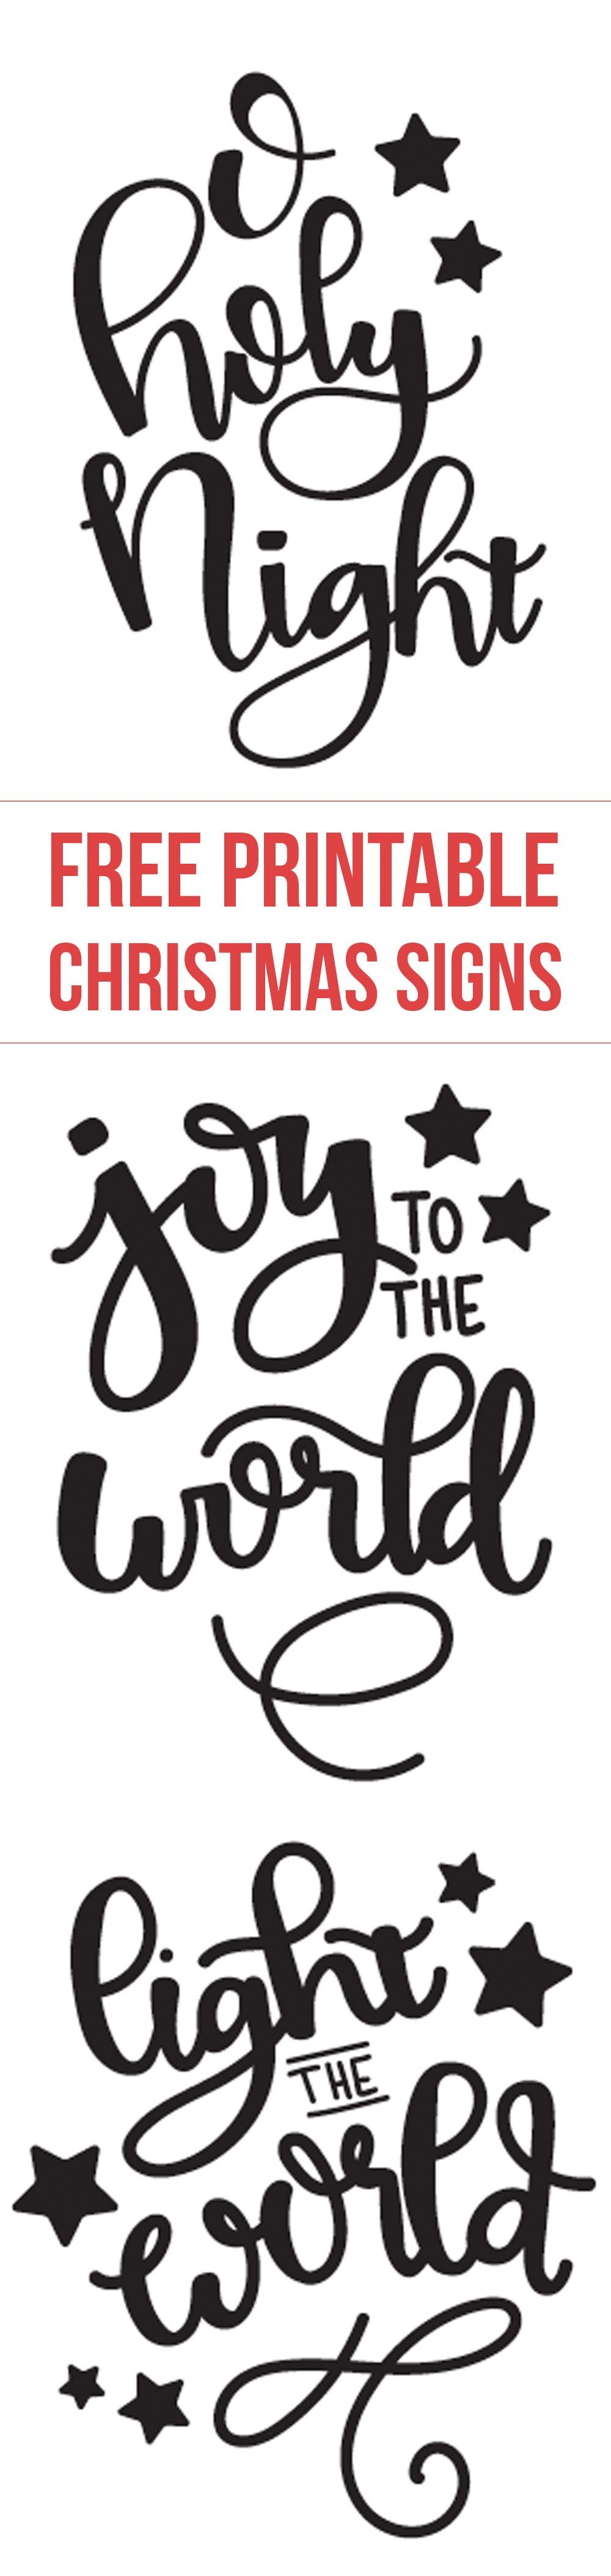 Light The World Designs | Live It. Love It. Lds. | Free Christmas - Free Printable Christmas Designs